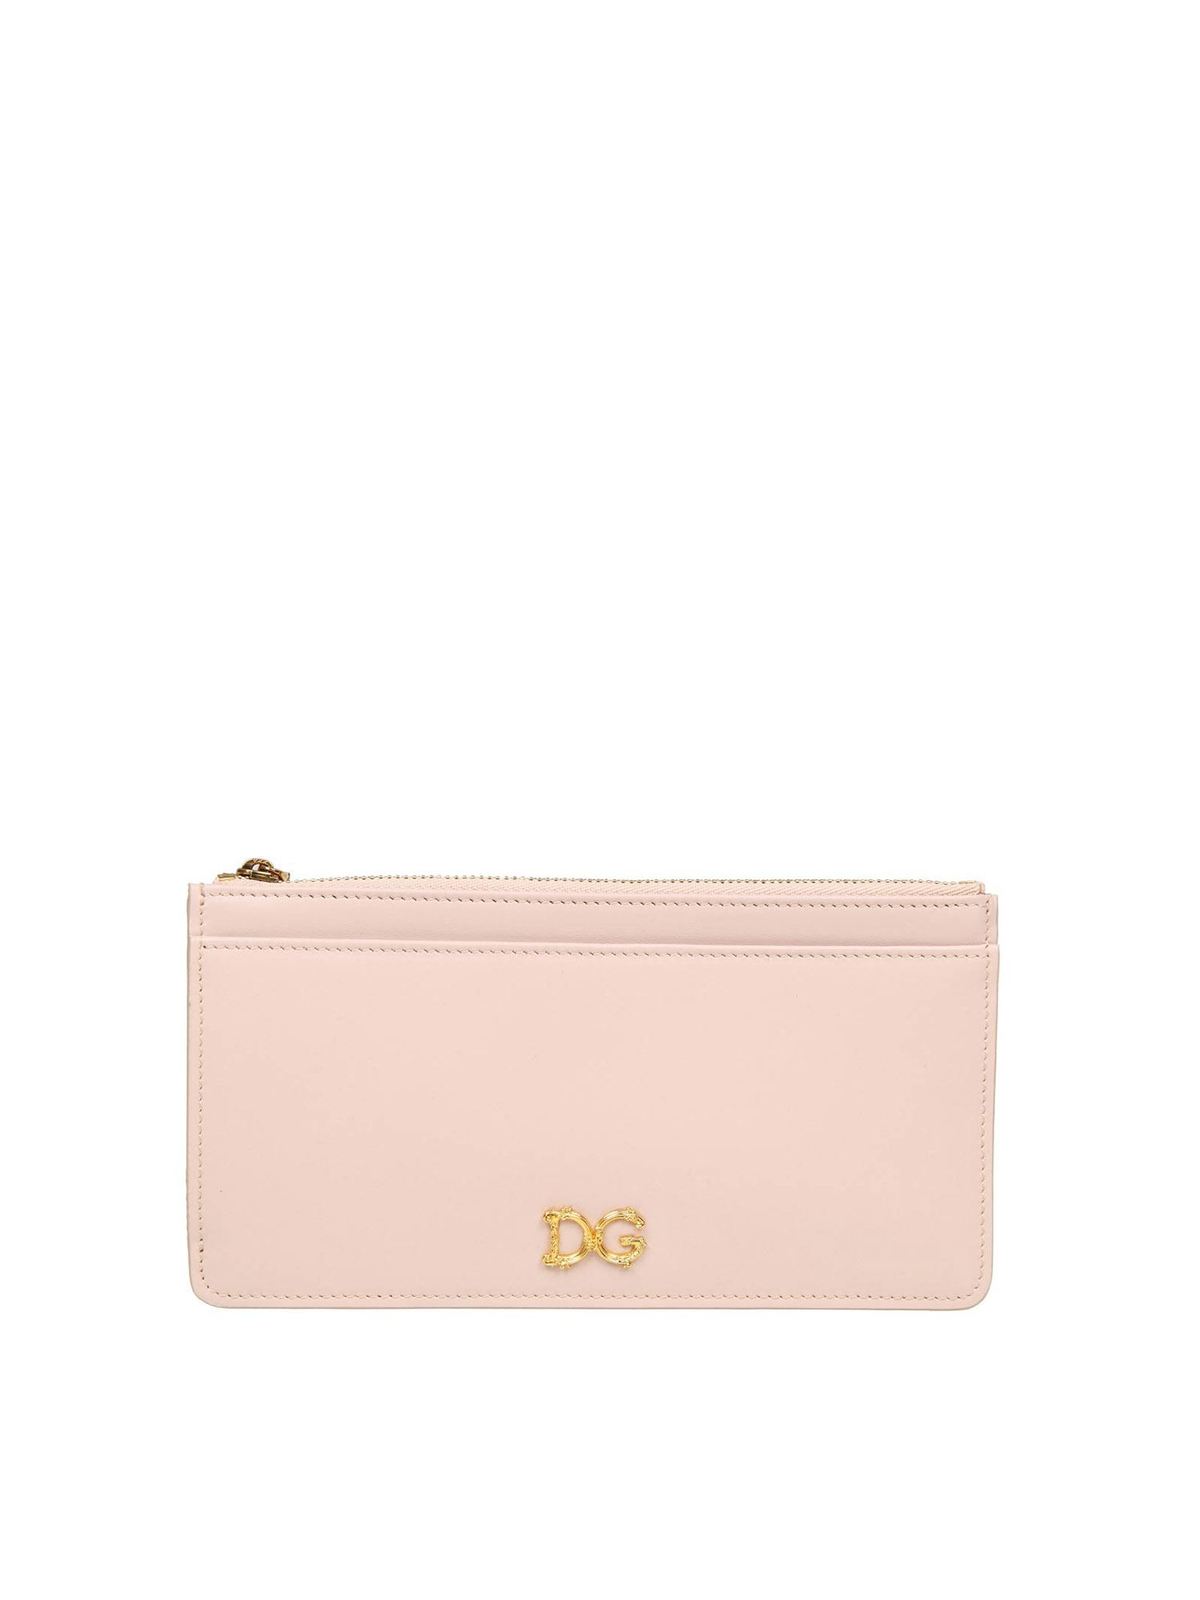 Wallets & purses Dolce & Gabbana - DG logo card holder in powder pink ...